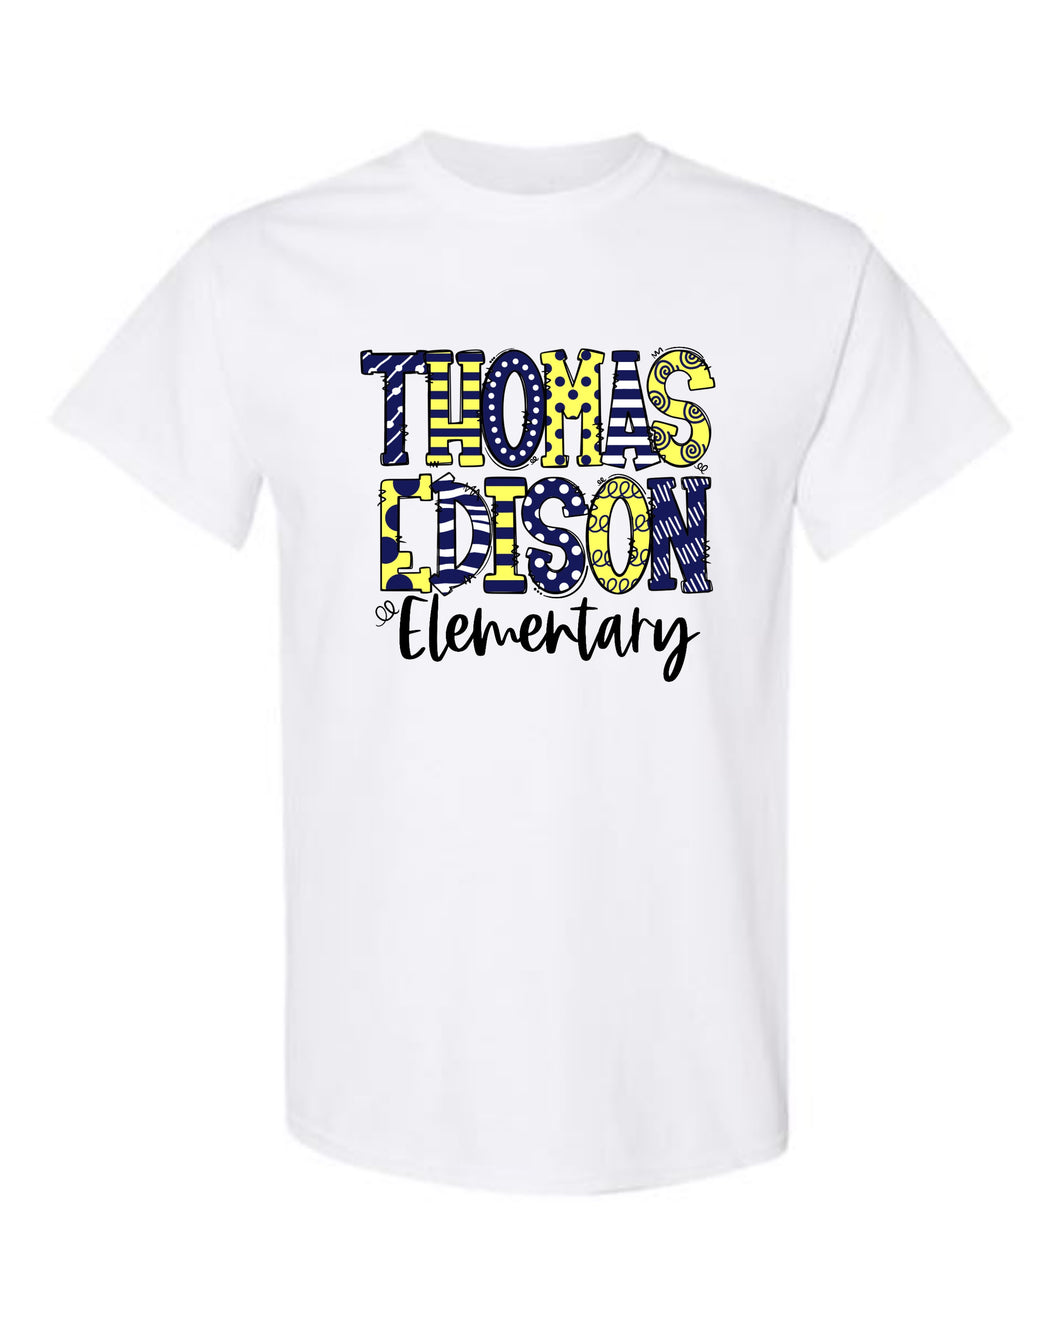 Thomas Edison Doodle Design Tshirt